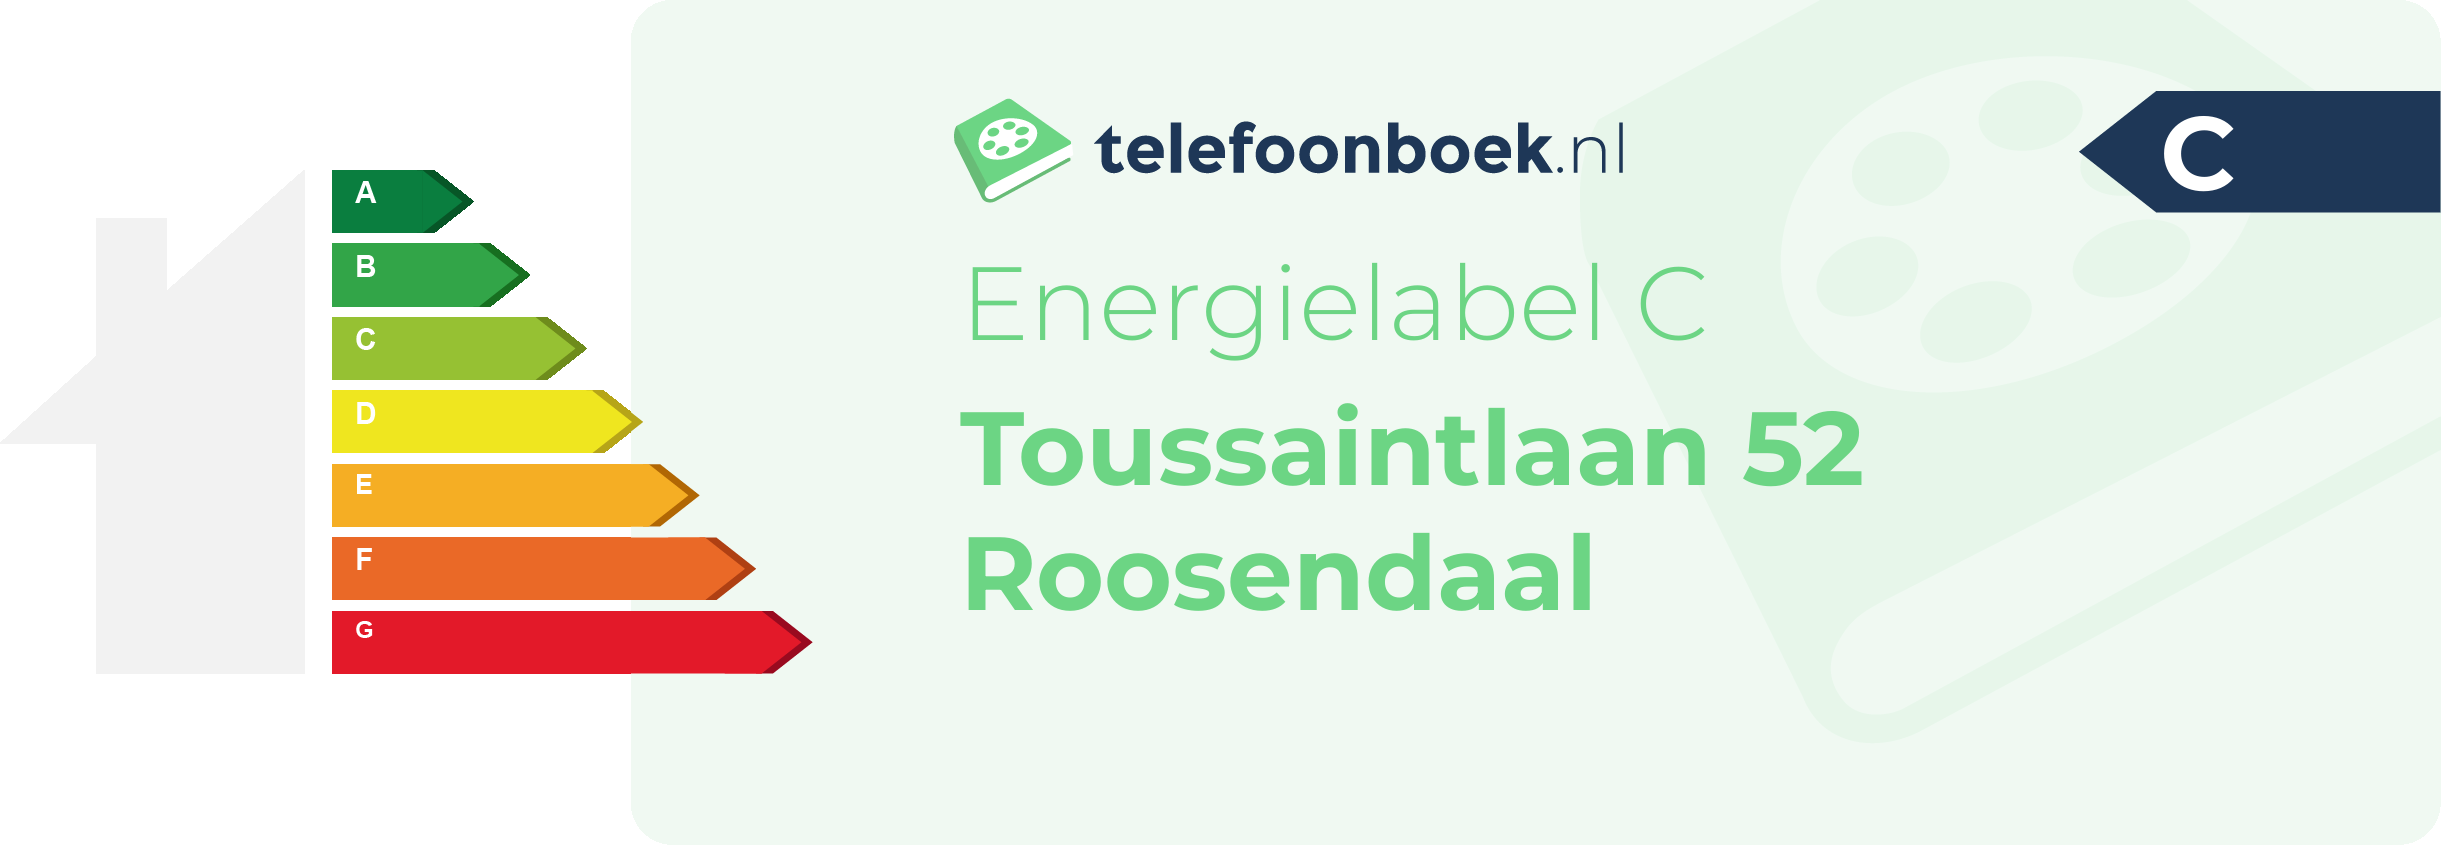 Energielabel Toussaintlaan 52 Roosendaal